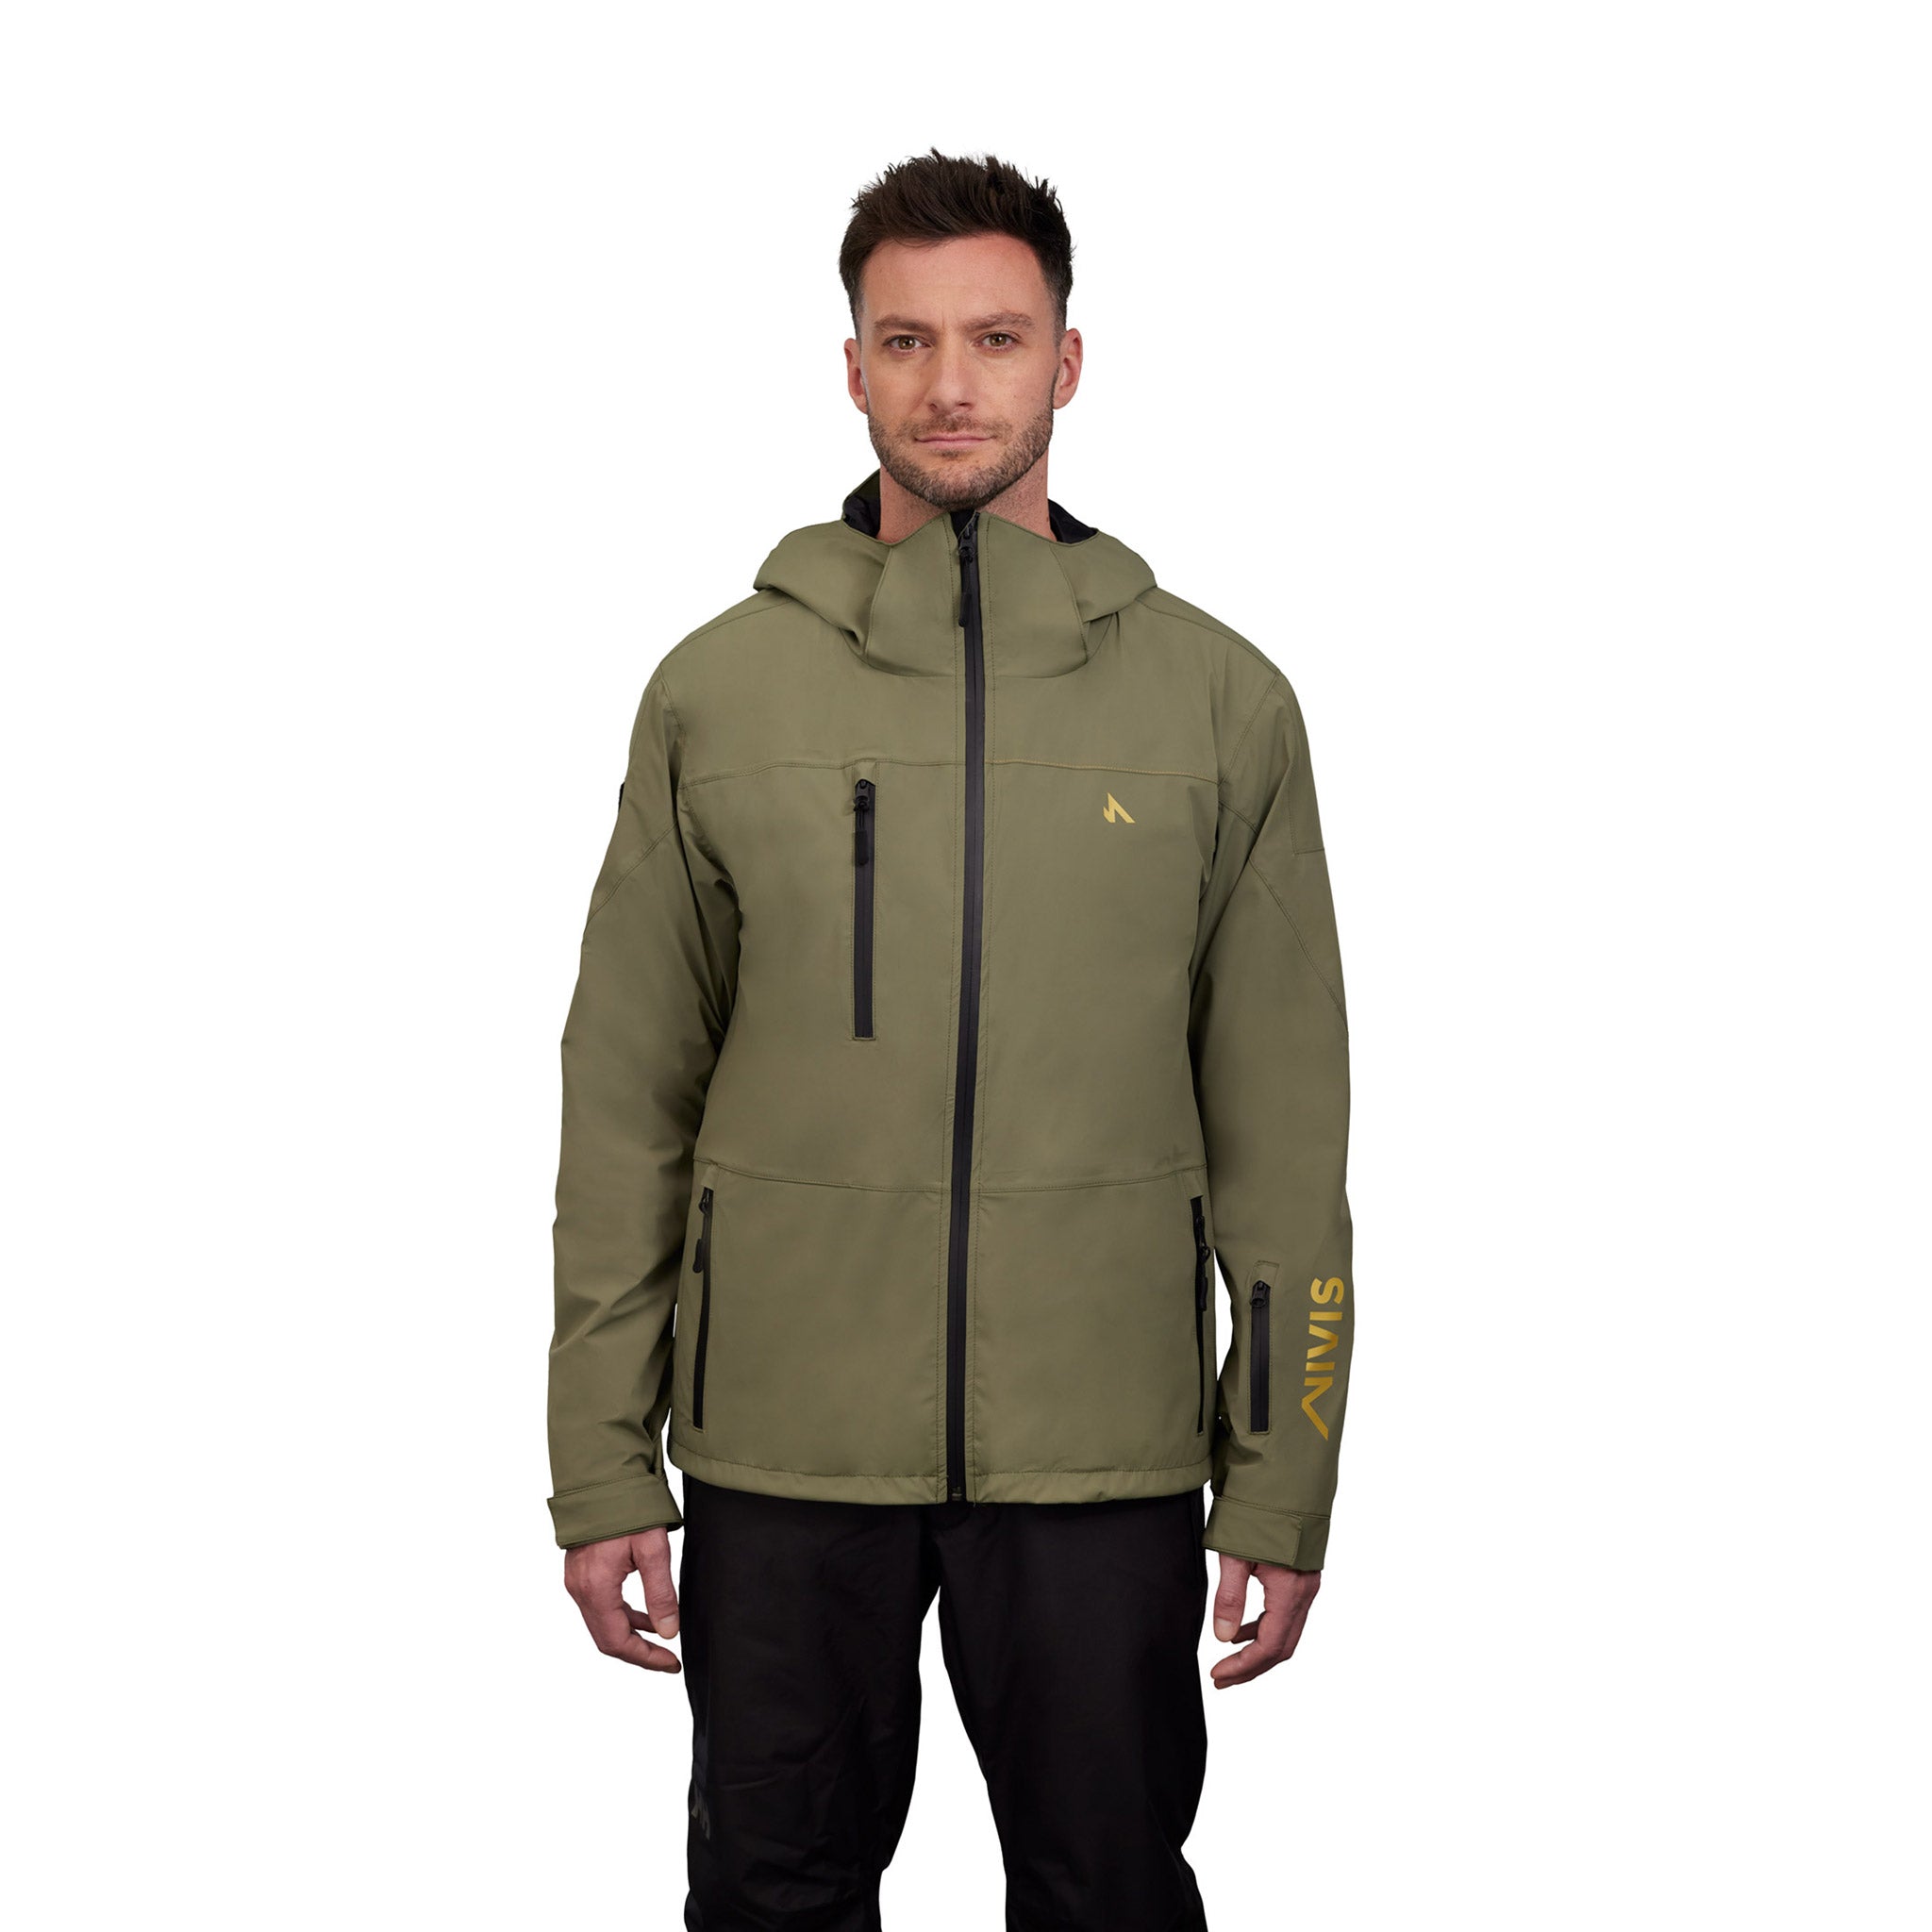 Nivis Ski Jacket in Army Green